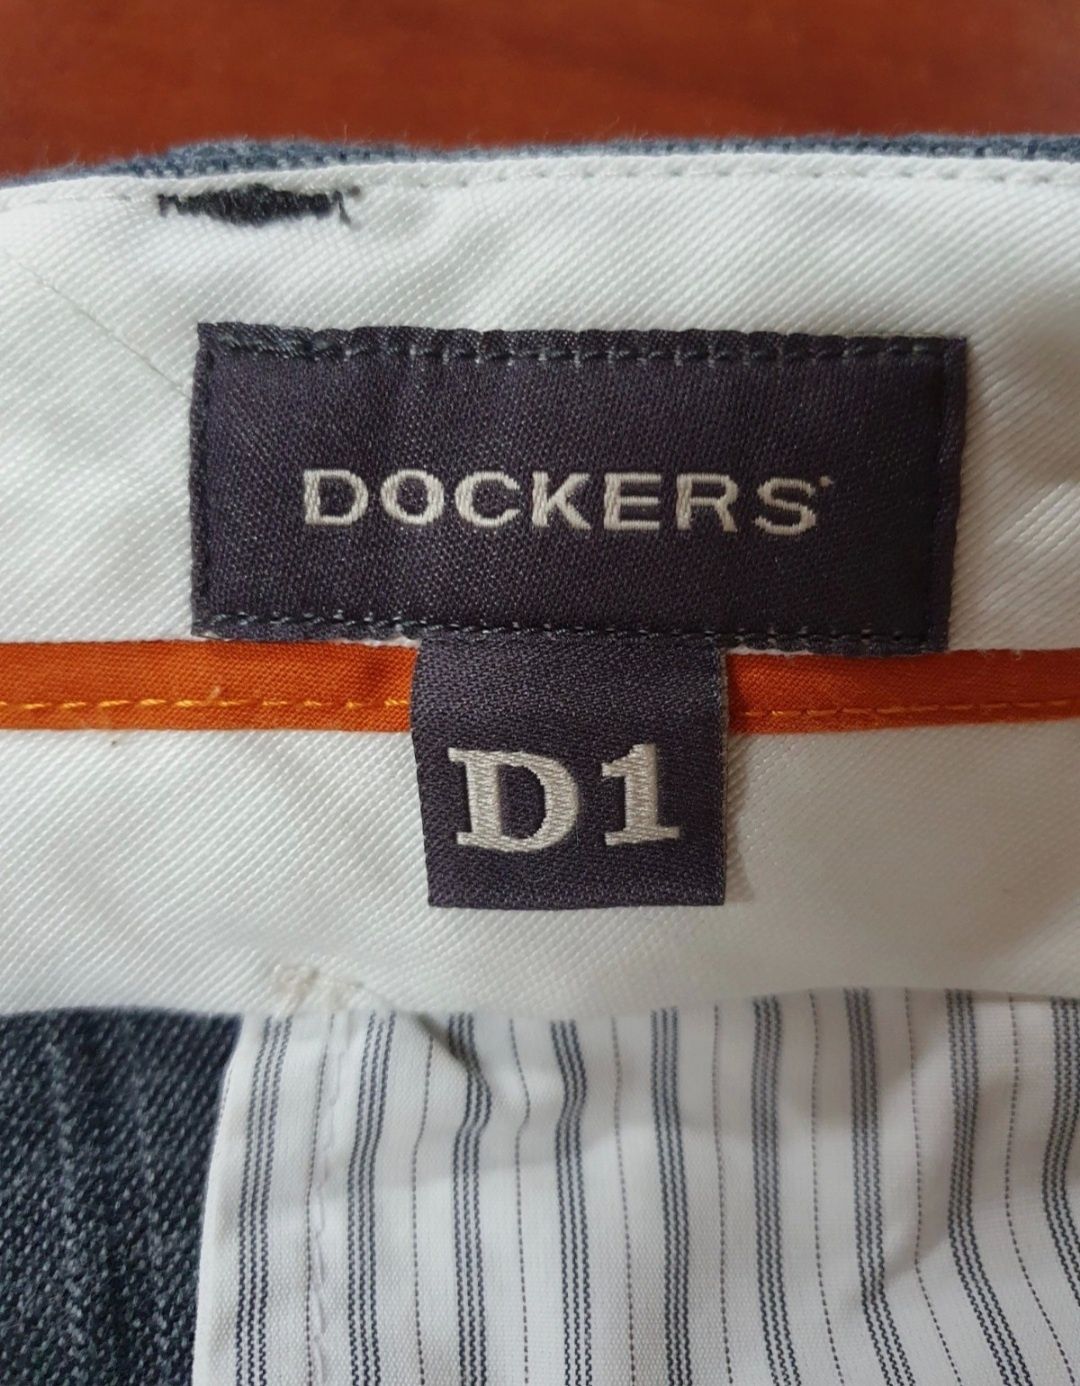 Dockers spodnie męskie chinosy krata pas 86cm